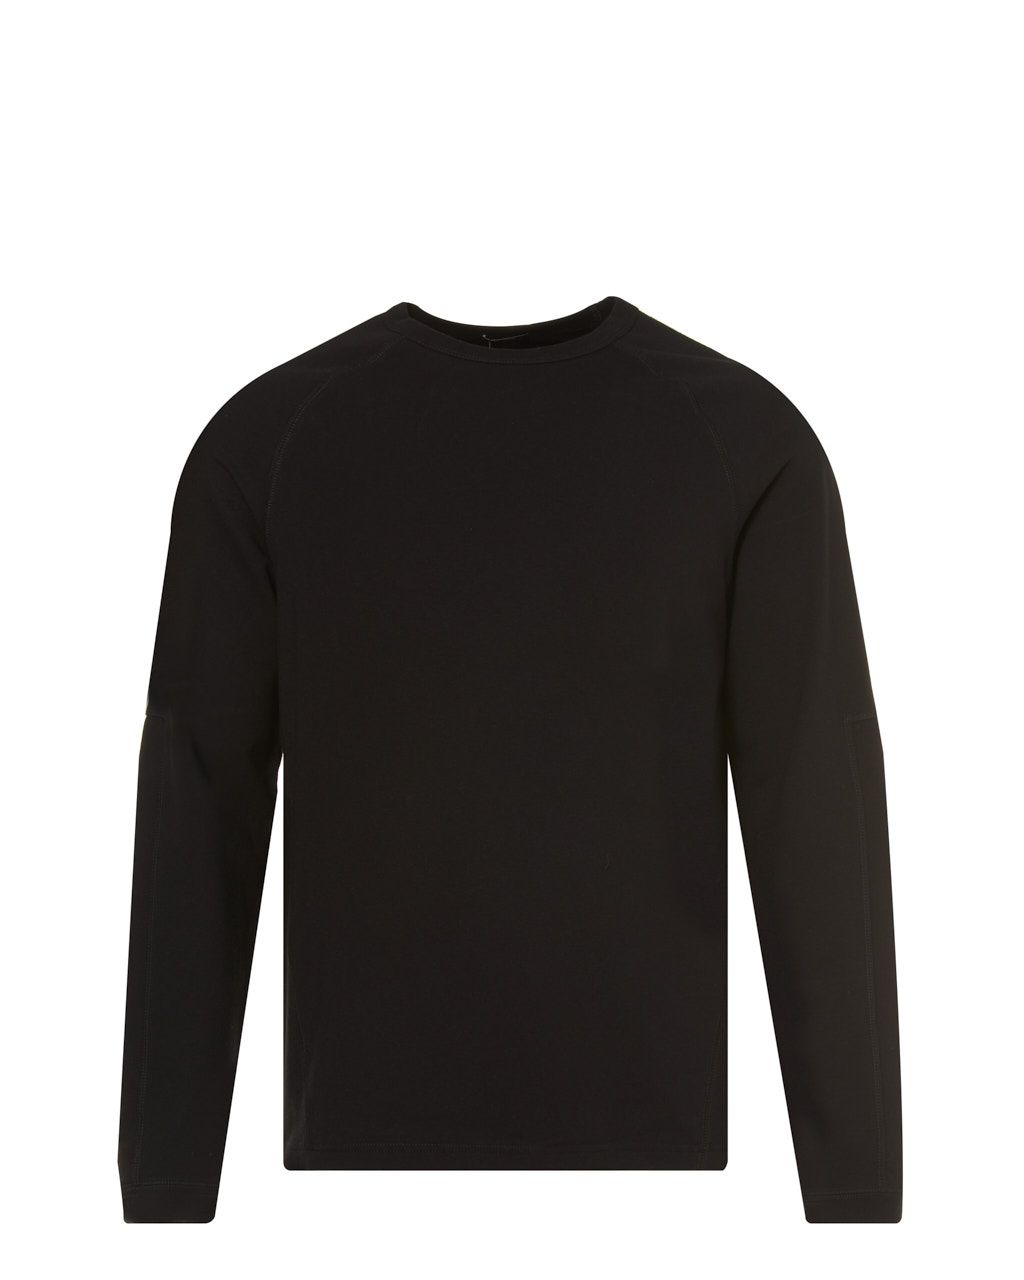 DENHAM CORBY Sweater Zwart 073479-001-L